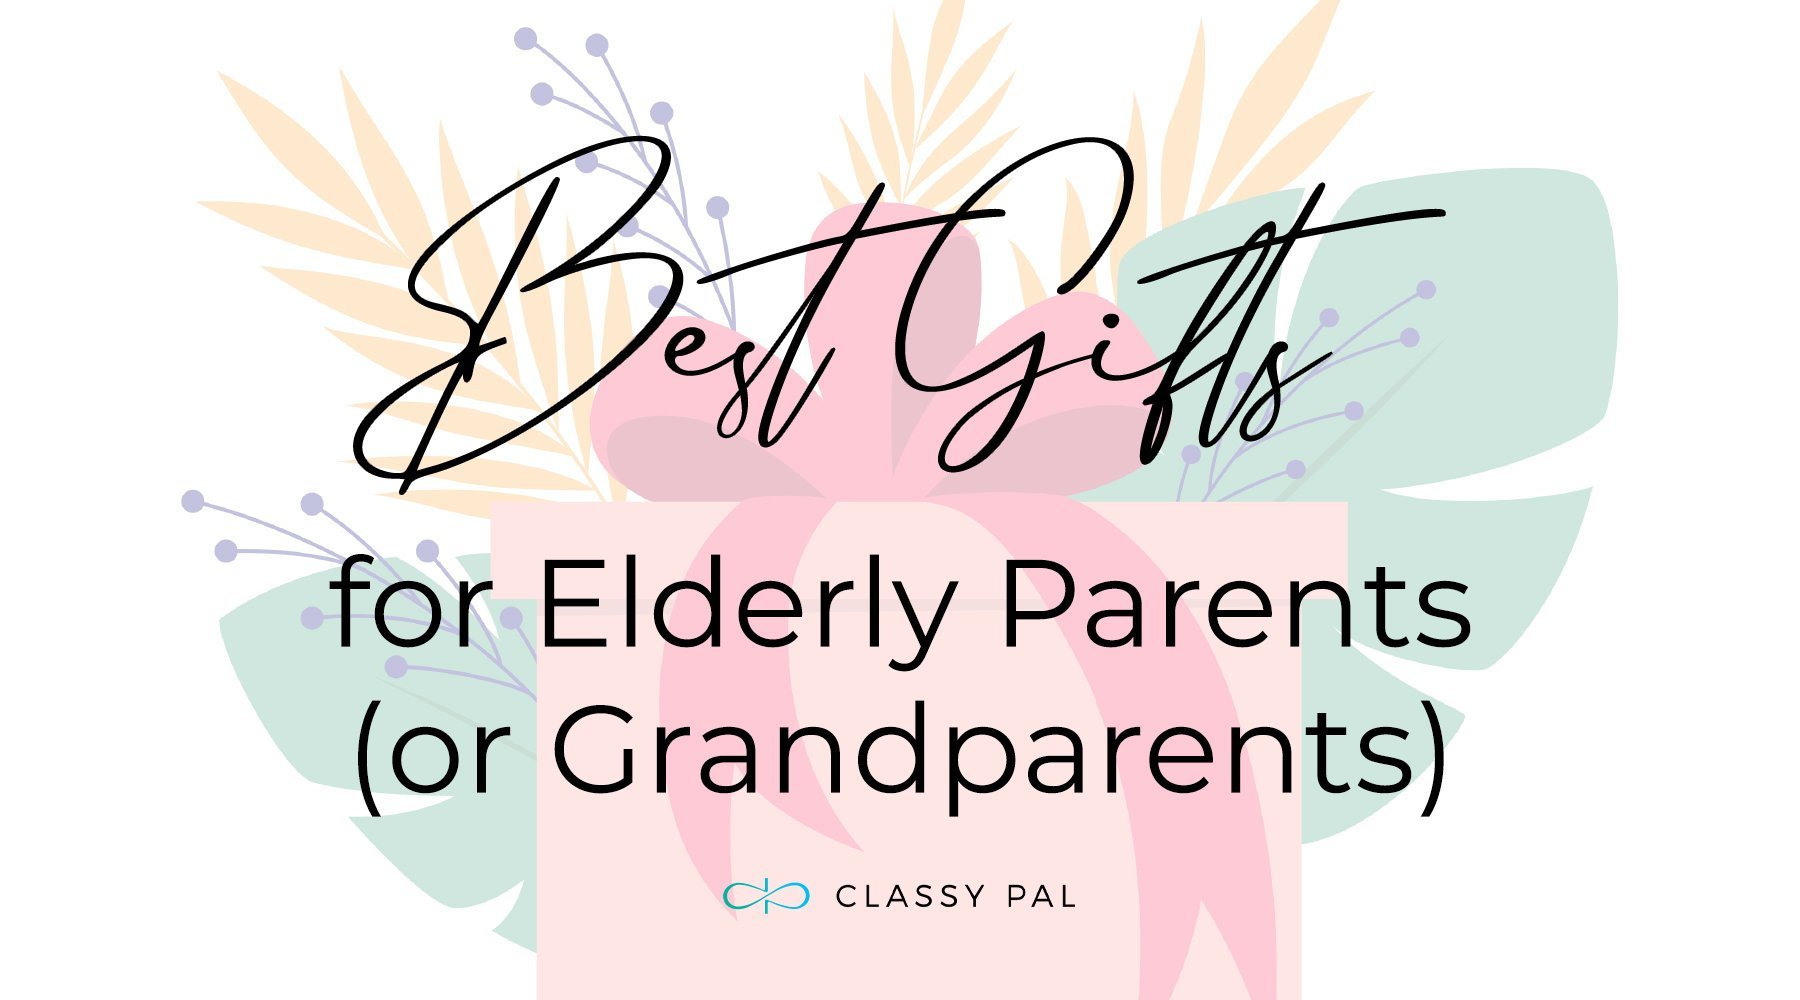 Best Gifts For Elderly Loved Ones, Grandparents & Parents